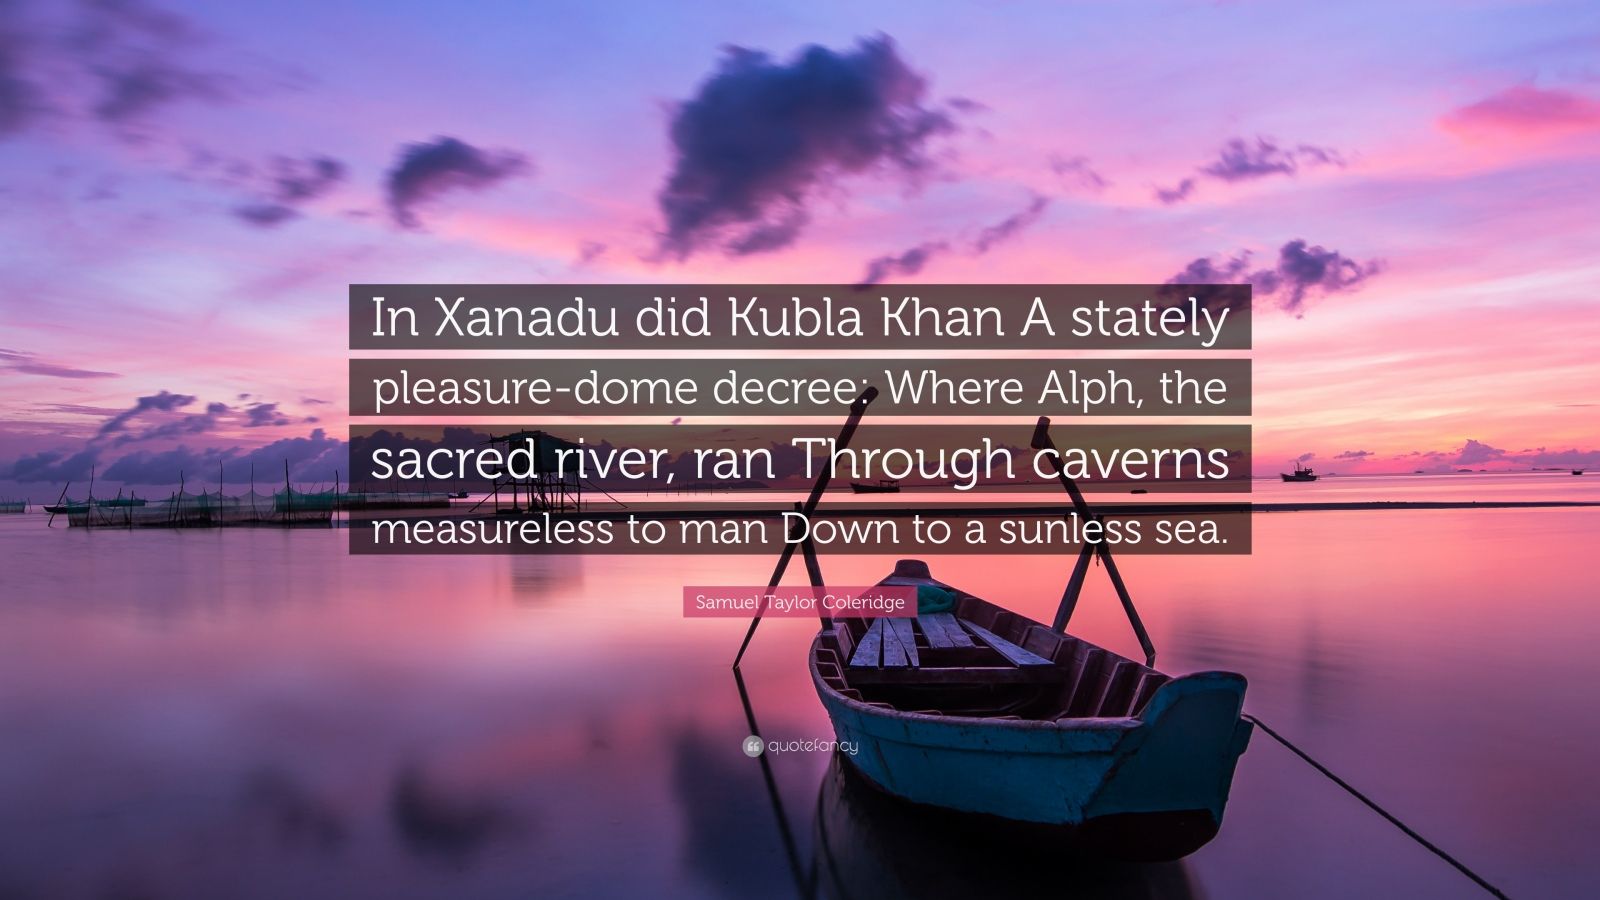 Samuel Taylor Coleridge Quote: In Xanadu did Kubla Khan A stately